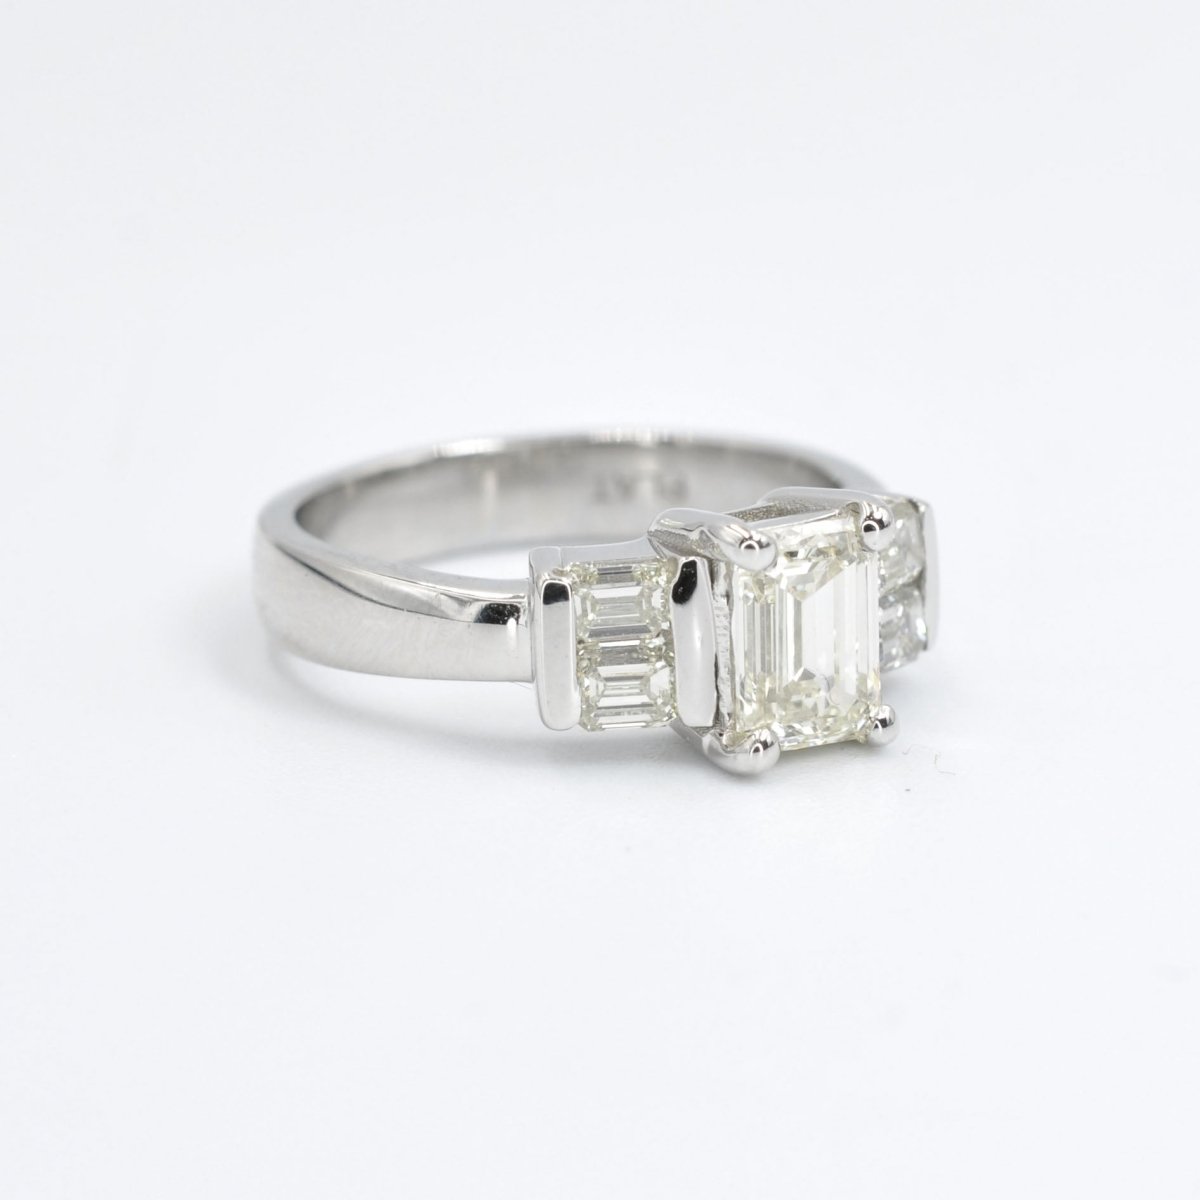 Certified 1.60CT Emerald Cut Diamond Engagement Ring in Platinum - Primestyle.com